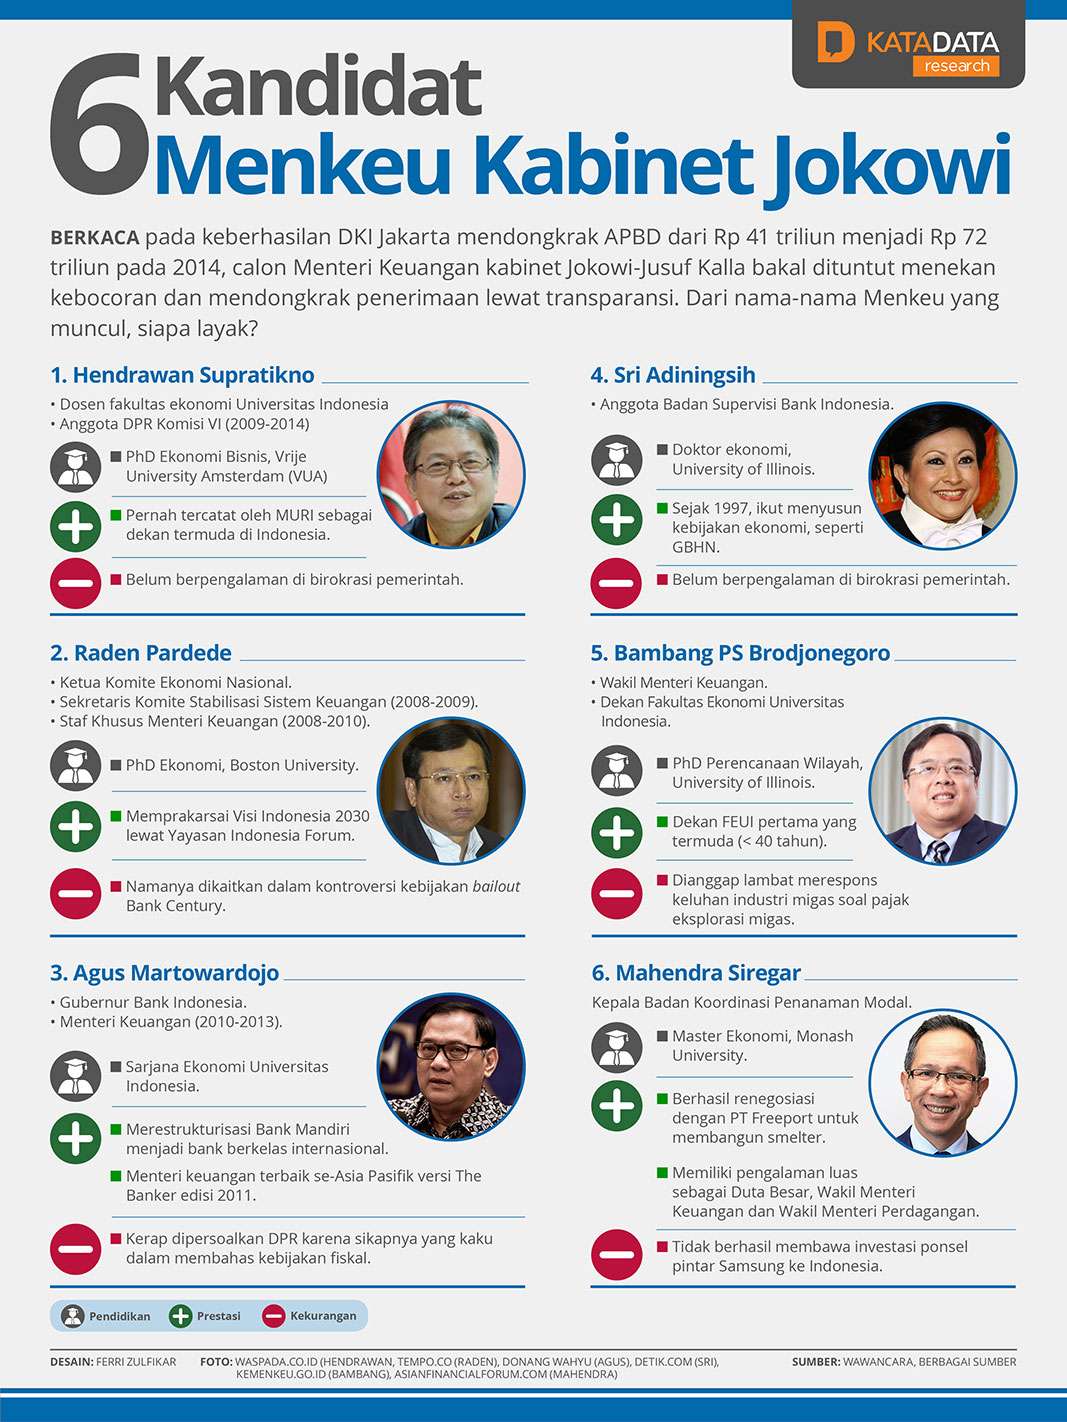 Enam Kandidat Menteri Keuangan Joko Widodo